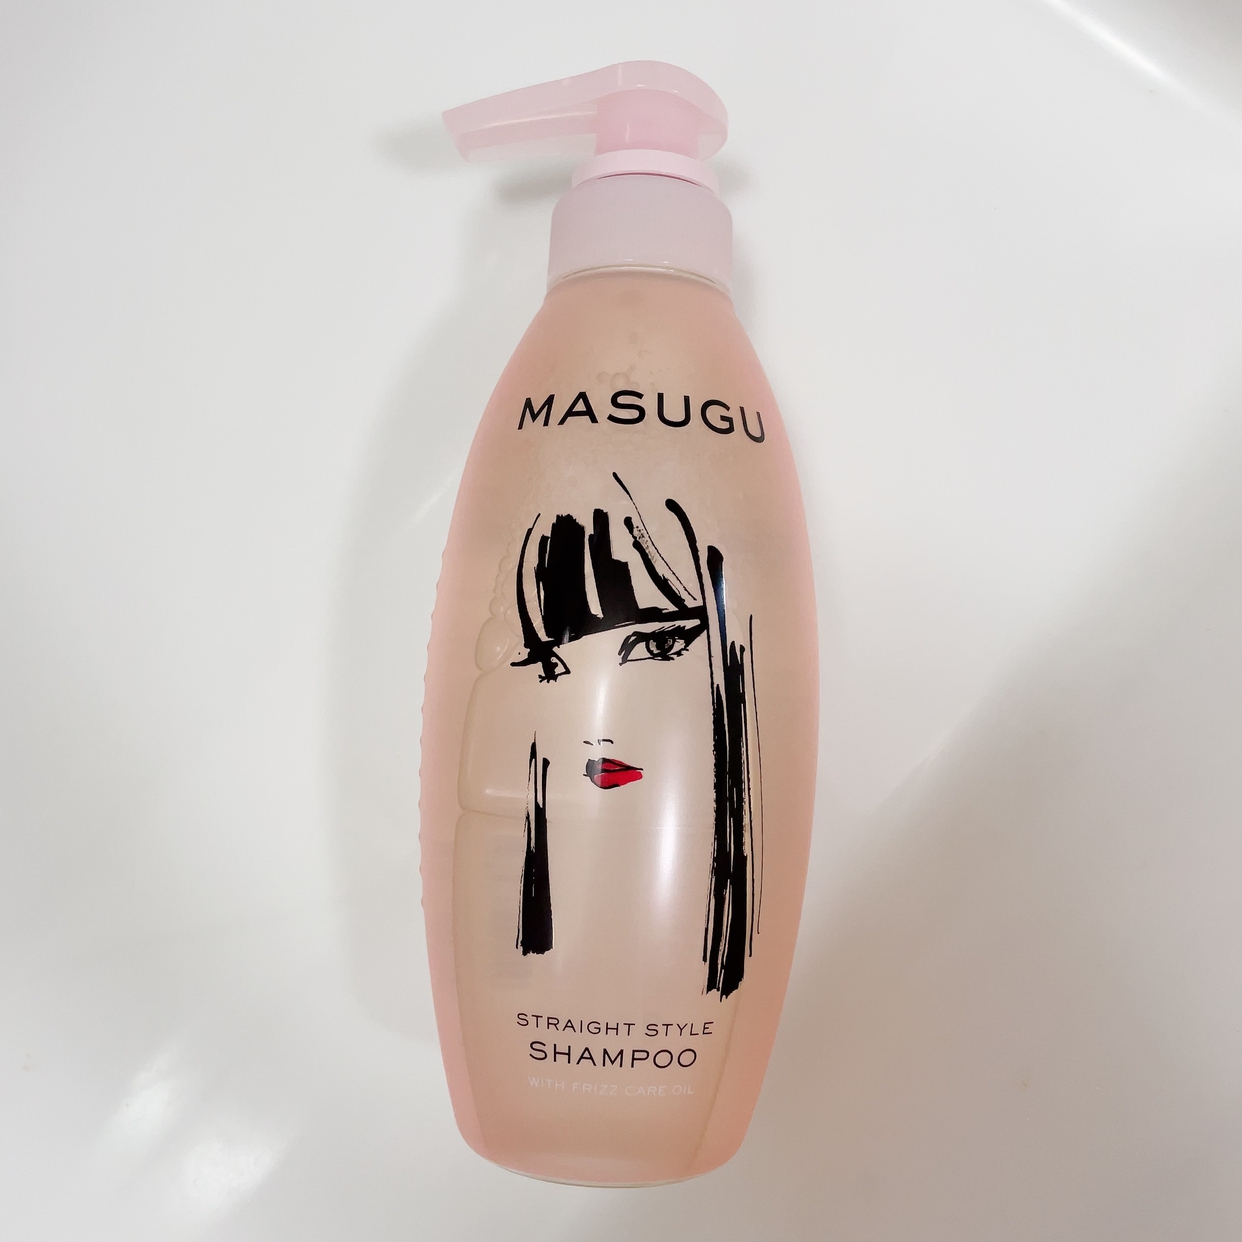 masugu(マッスグ) シャンプーに関するりなぴょん♡さんの口コミ画像1